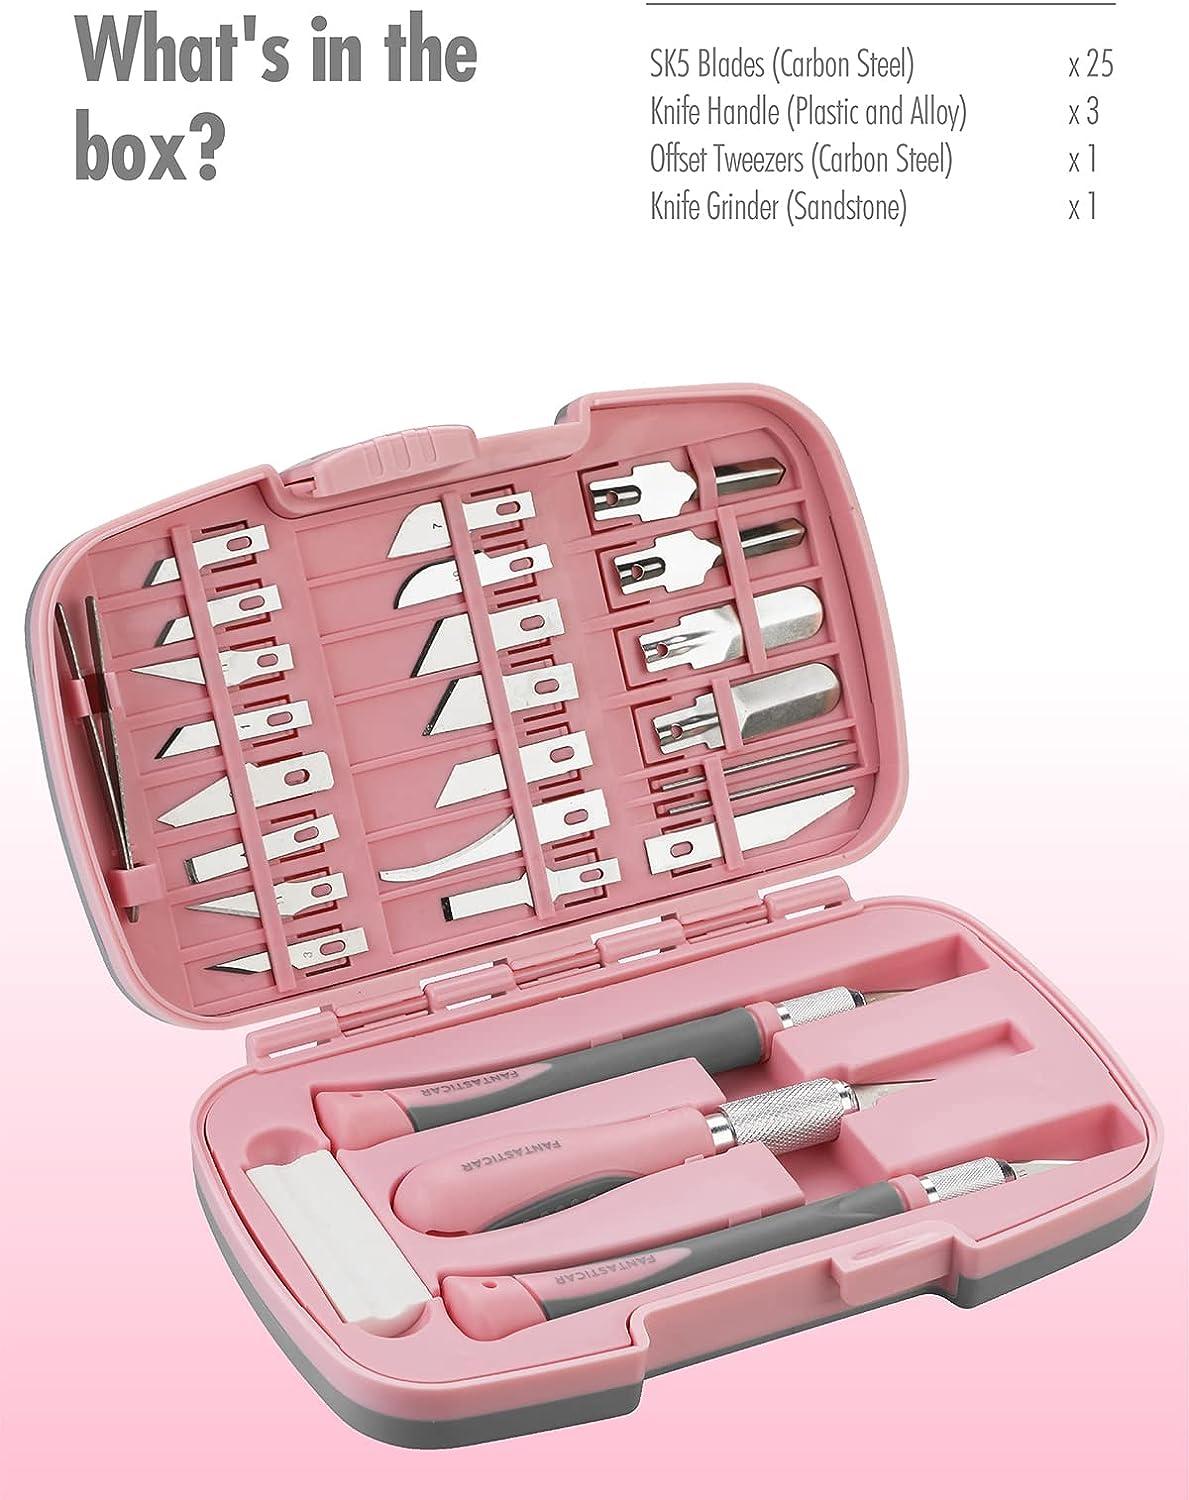  W.A. Portman Pink Precision Knife Set - 2-Piece Pink Comfort  Grip Hobby Knife Set with 100 Carbon Steel #11 Blades - Pink Knife Set with  Extra Craft Knife Blades - Ergonomic